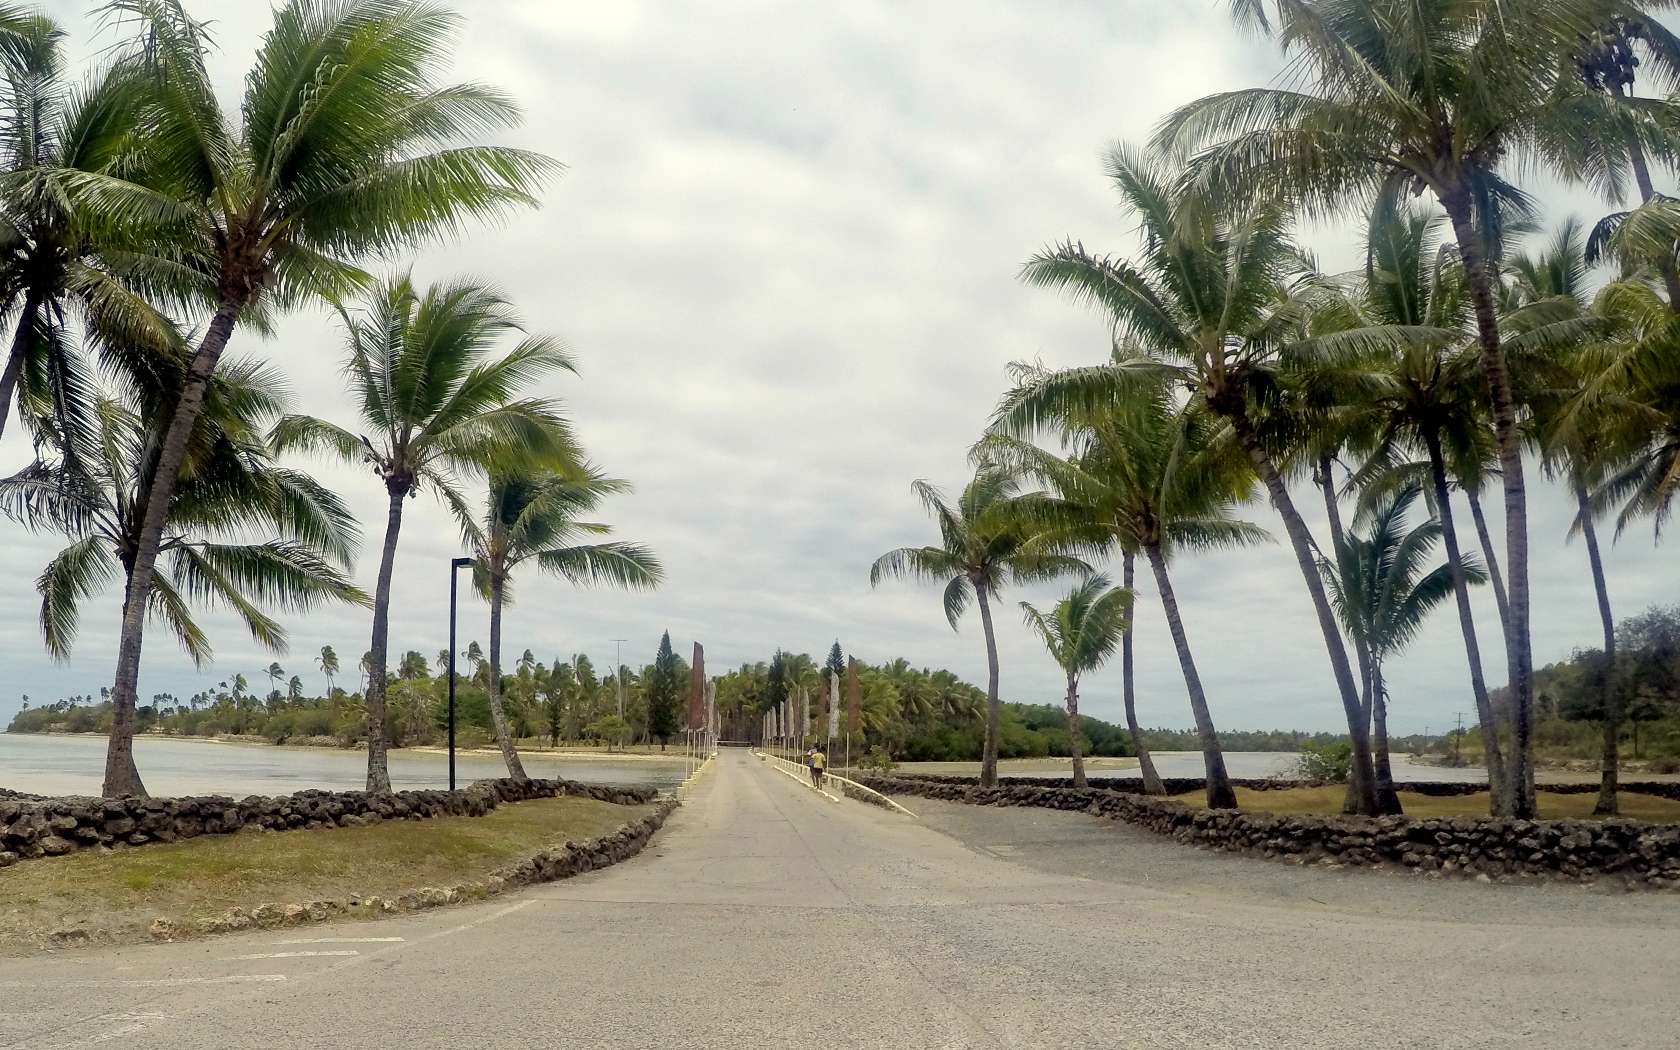 Shangri La Fijian Resort